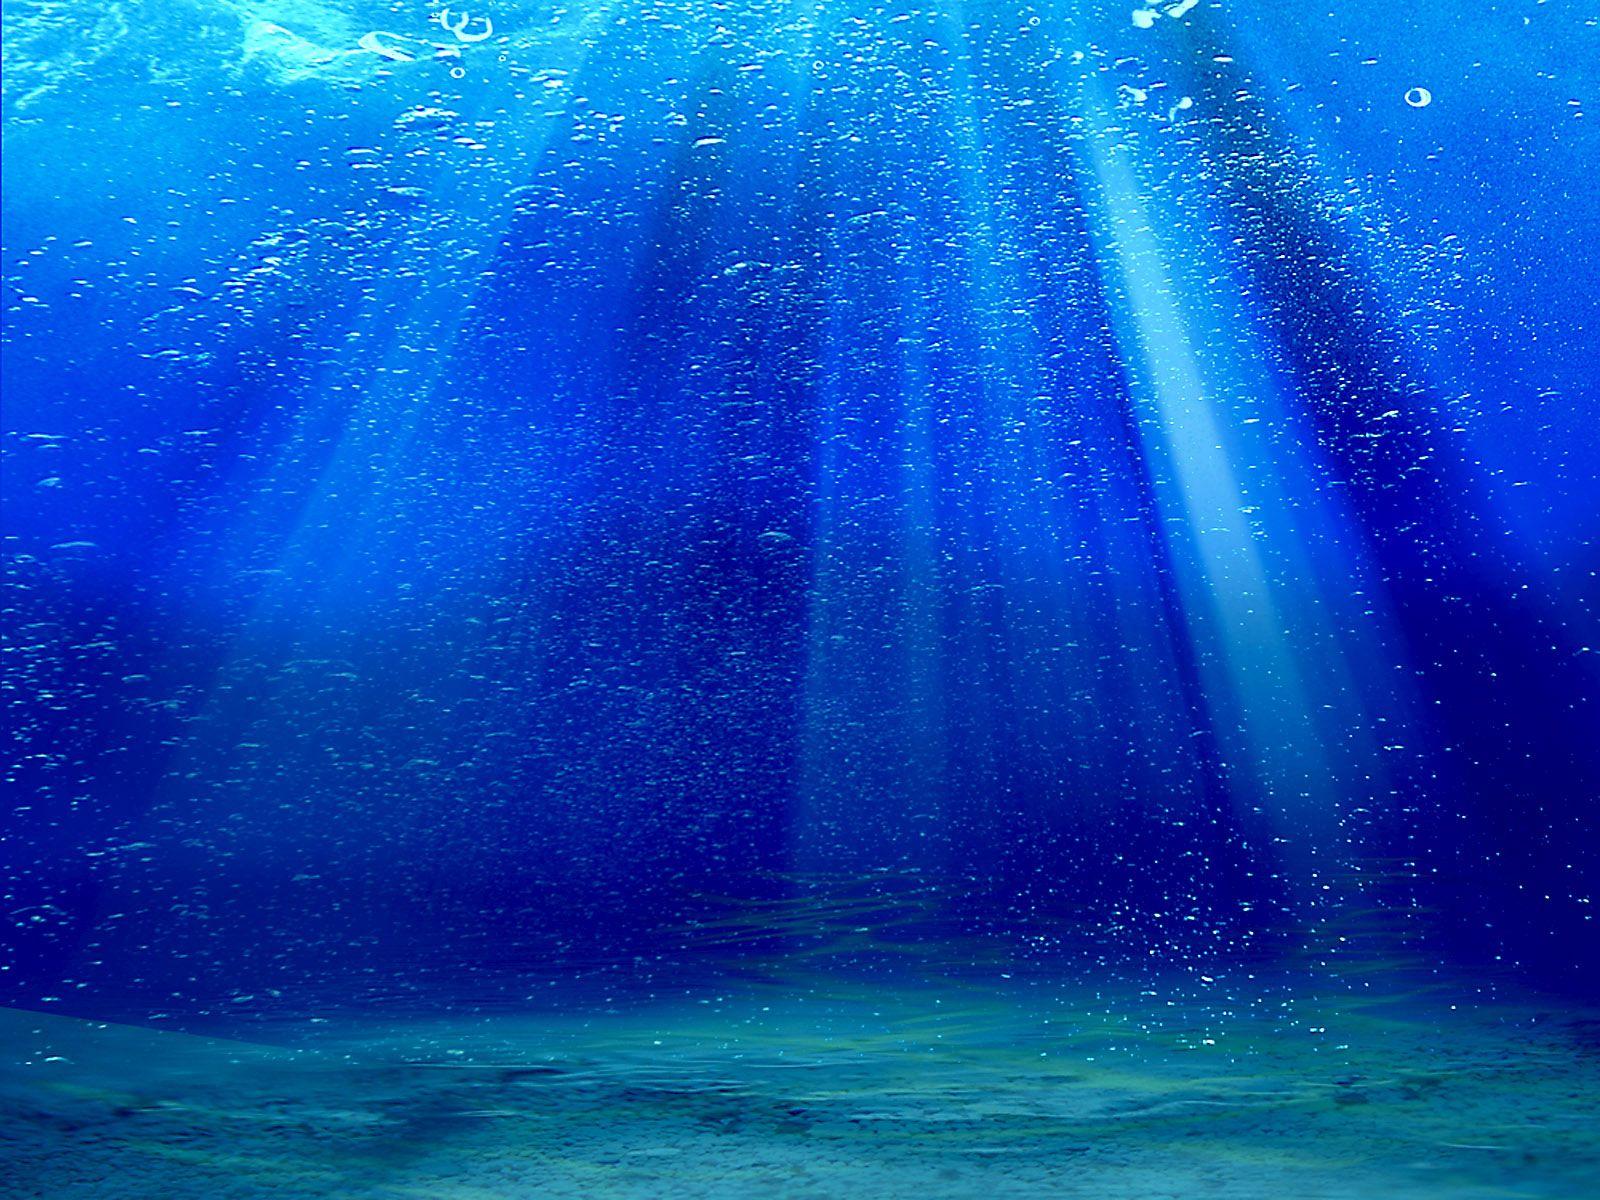 shades of Blue. Deep blue sea